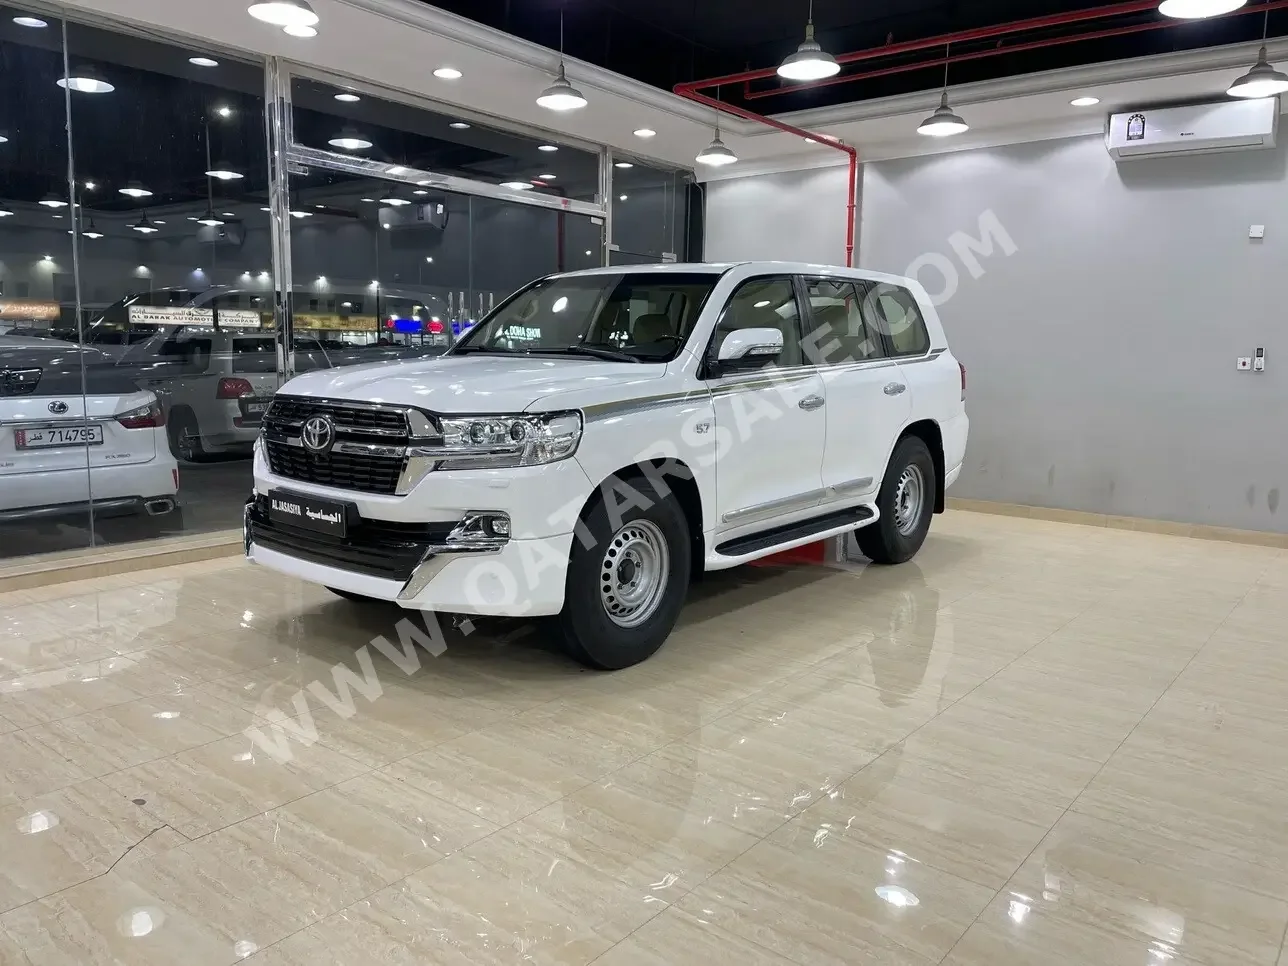 Toyota  Land Cruiser  VXR  2016  Automatic  126,000 Km  8 Cylinder  Four Wheel Drive (4WD)  SUV  White